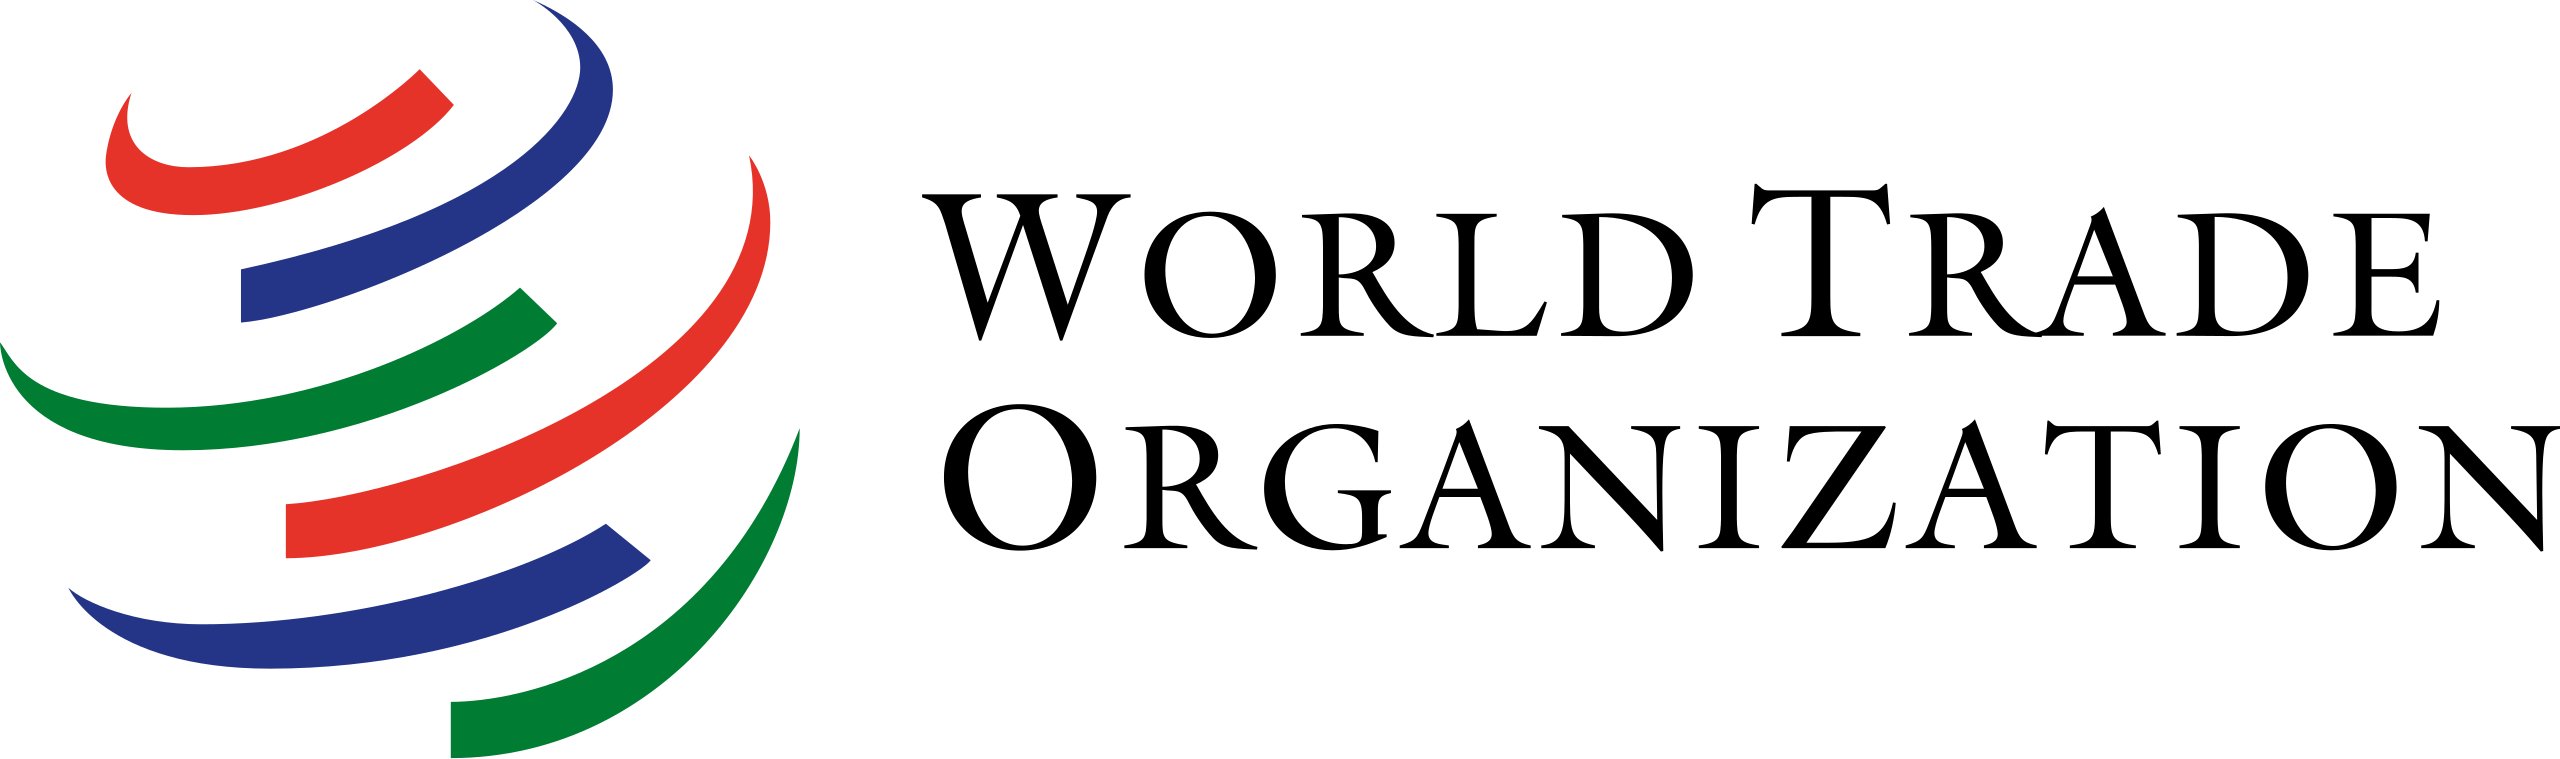 File:World Trade Organization (logo and wordmark).svg - Wikimedia Commons